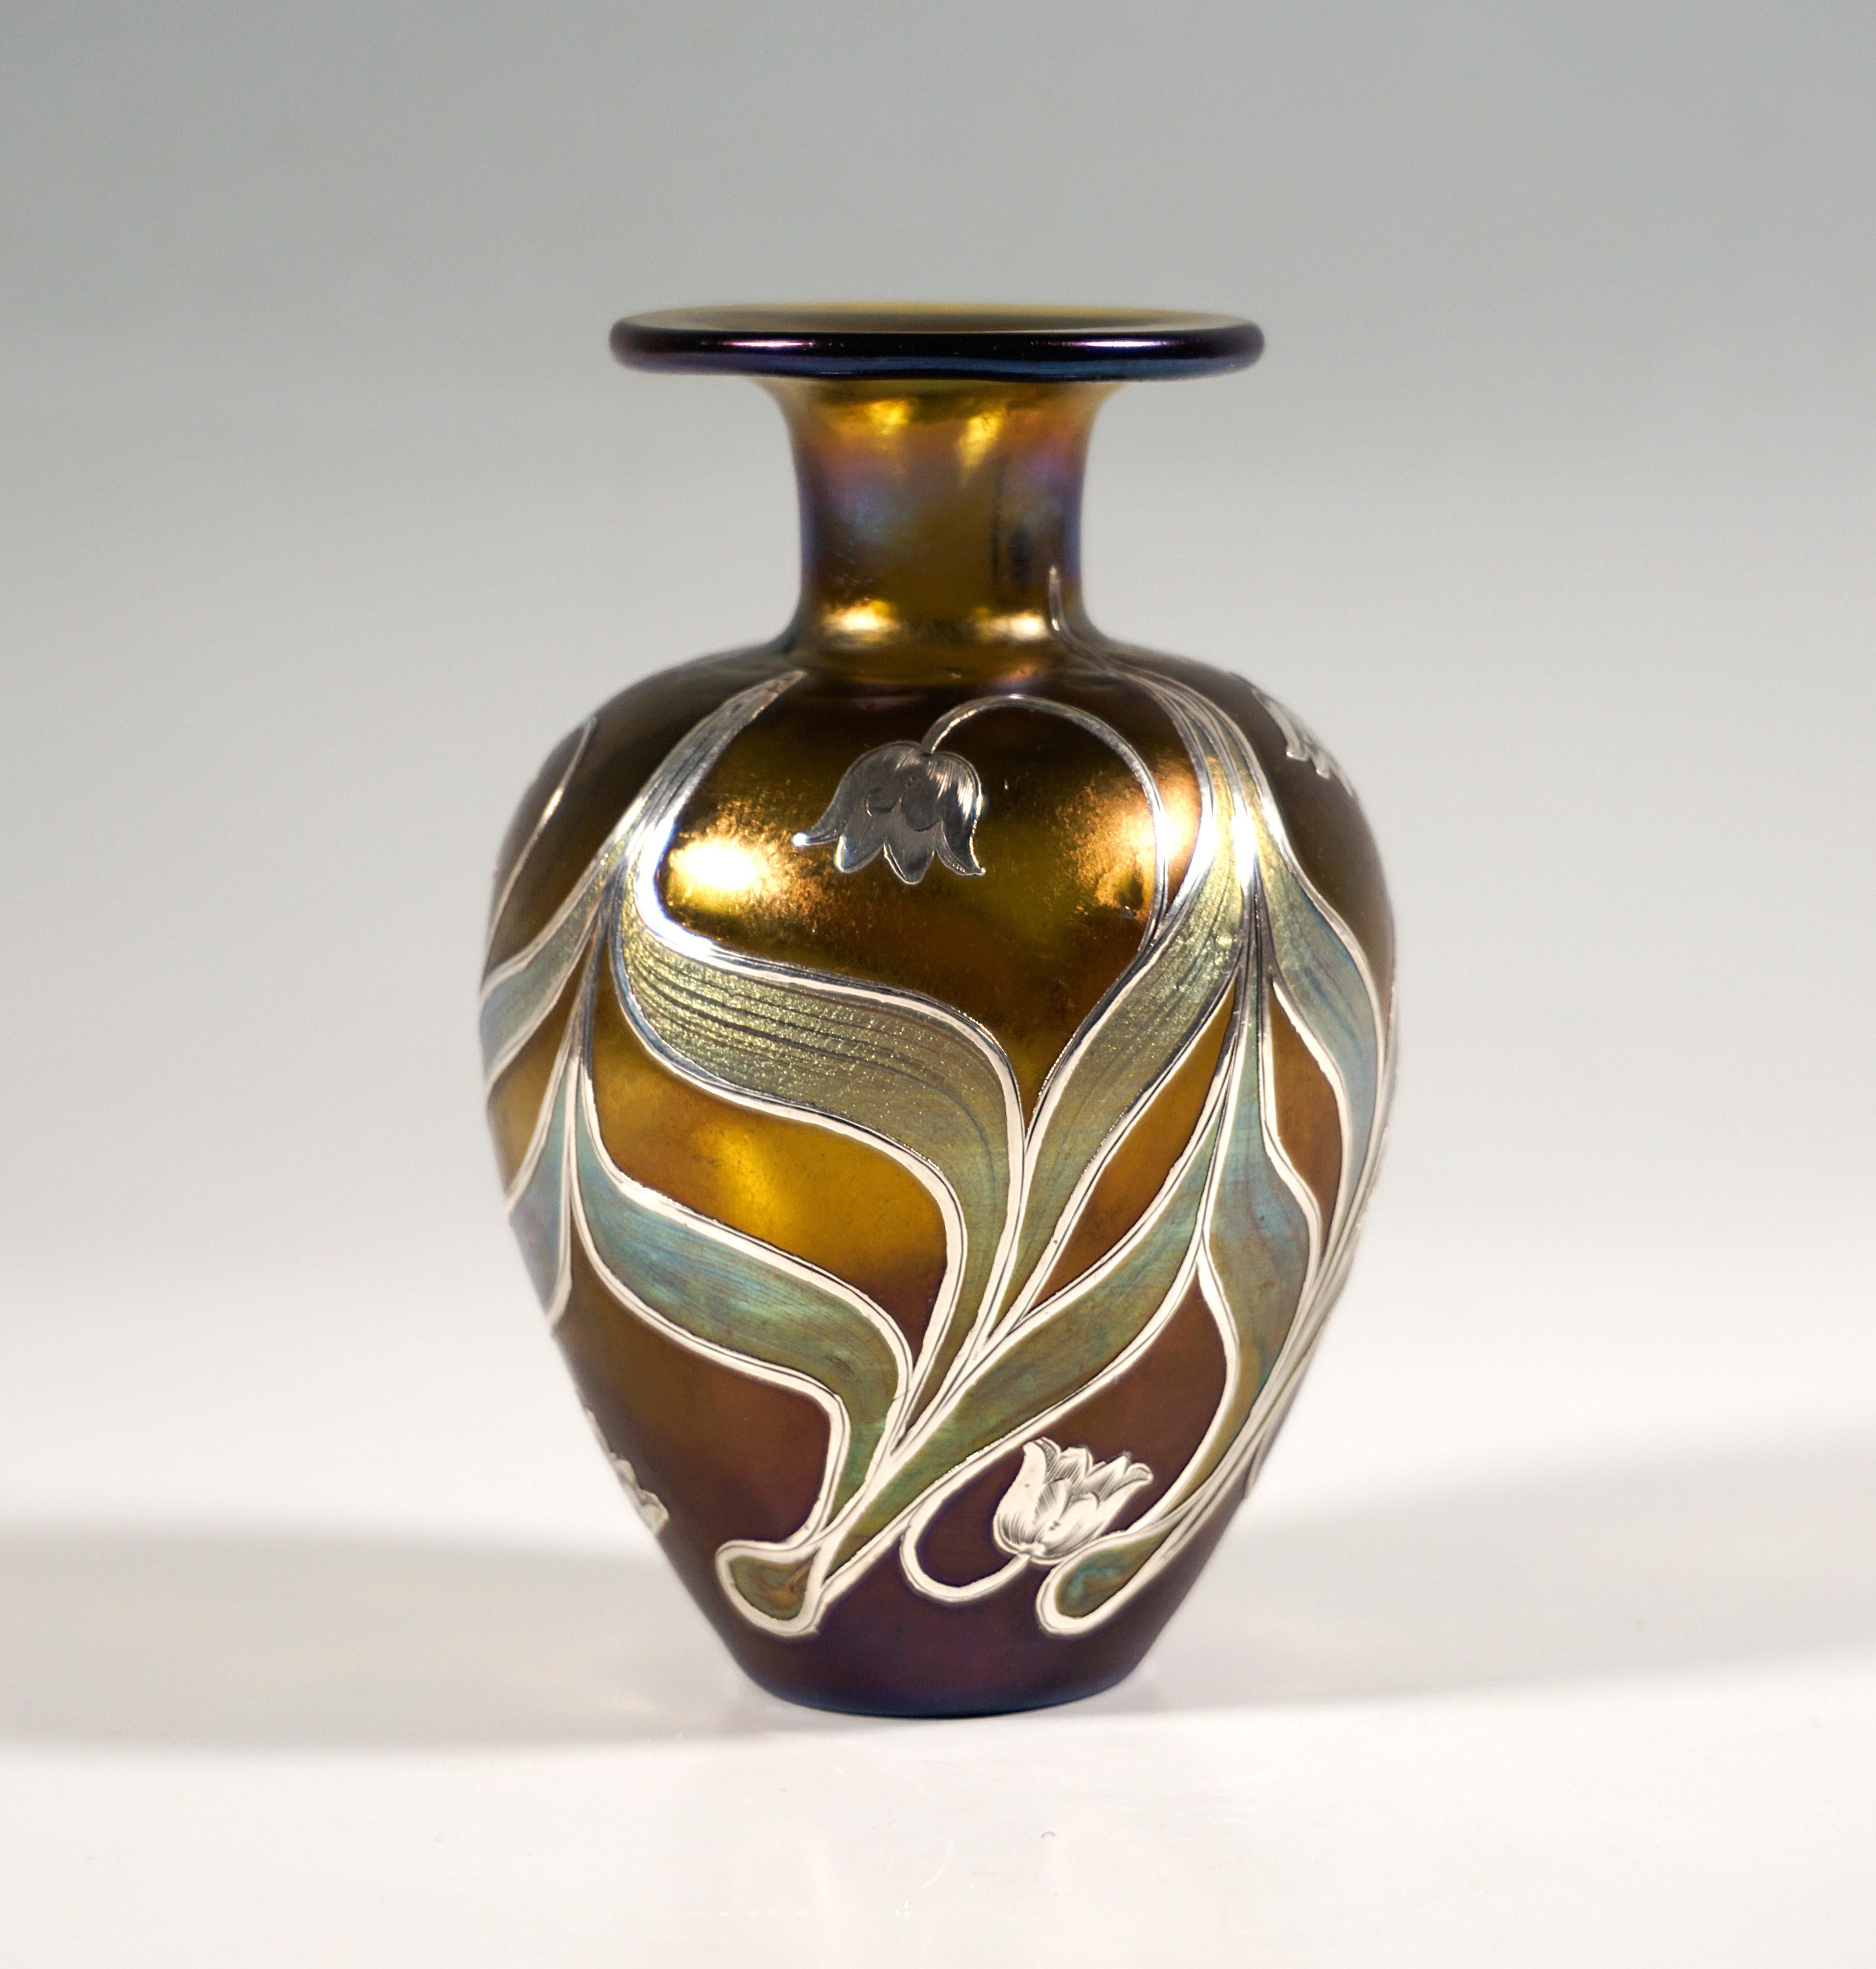 Austrian Loetz Art Nouveau Vase Bronce Phenomenon Gre 7801 With Silver Overlay, Ca 1900